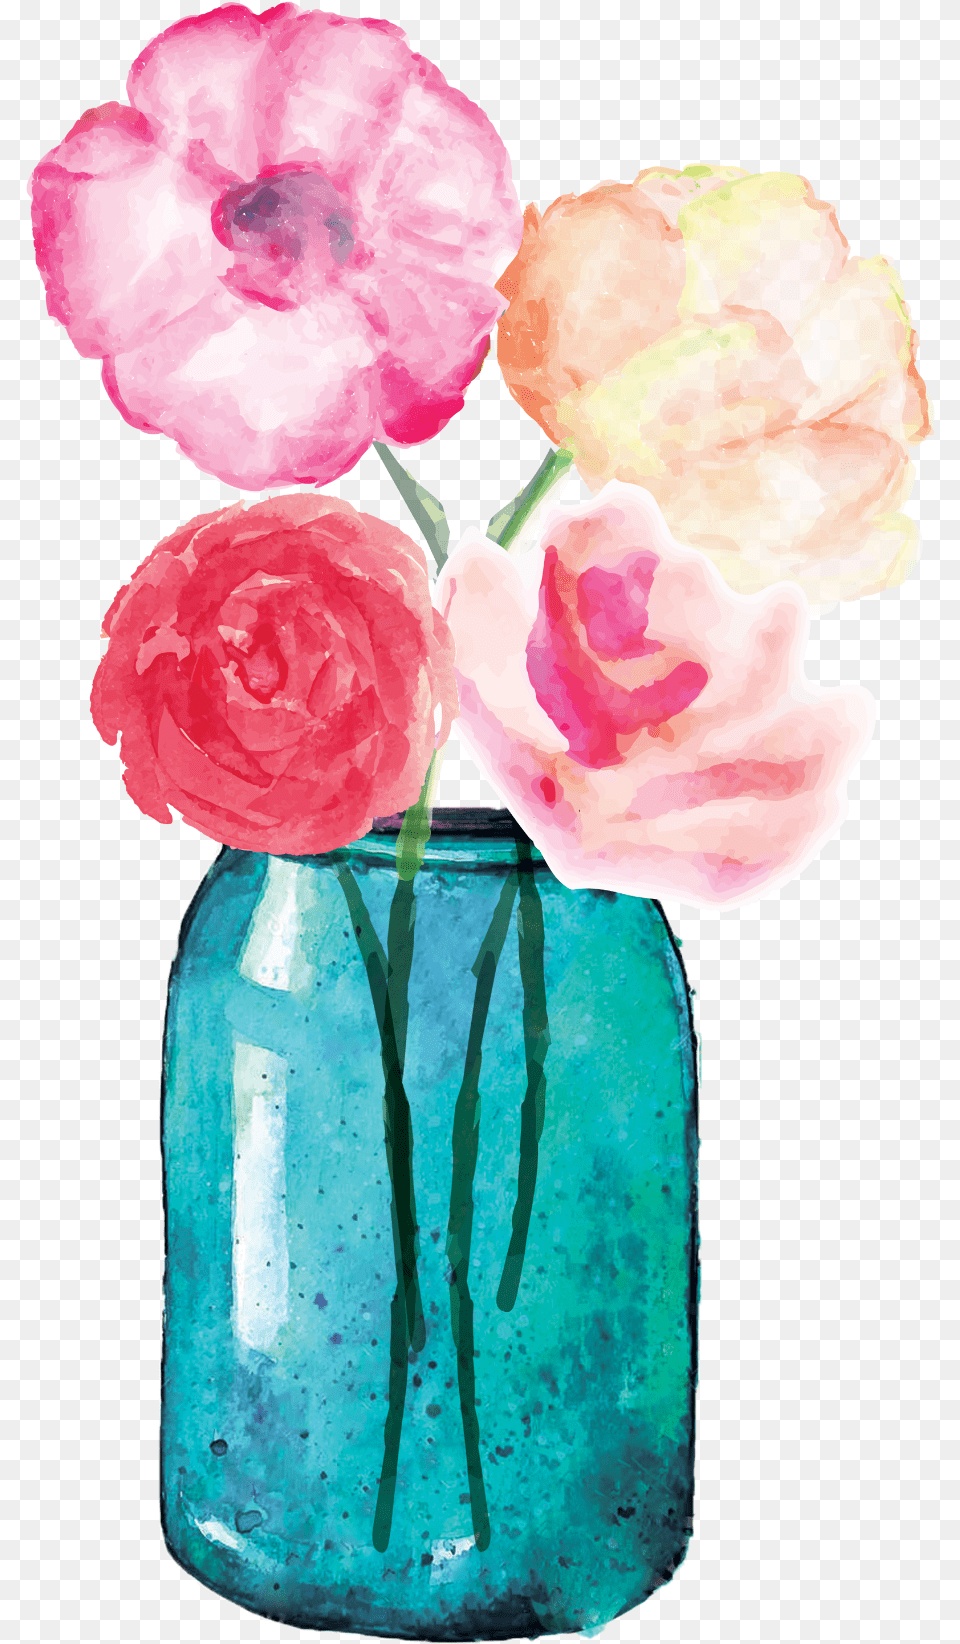 Library Of Flower Mason Jar Graphic Transparent Background Flowers Mason Jars, Pottery, Vase, Petal, Plant Png Image